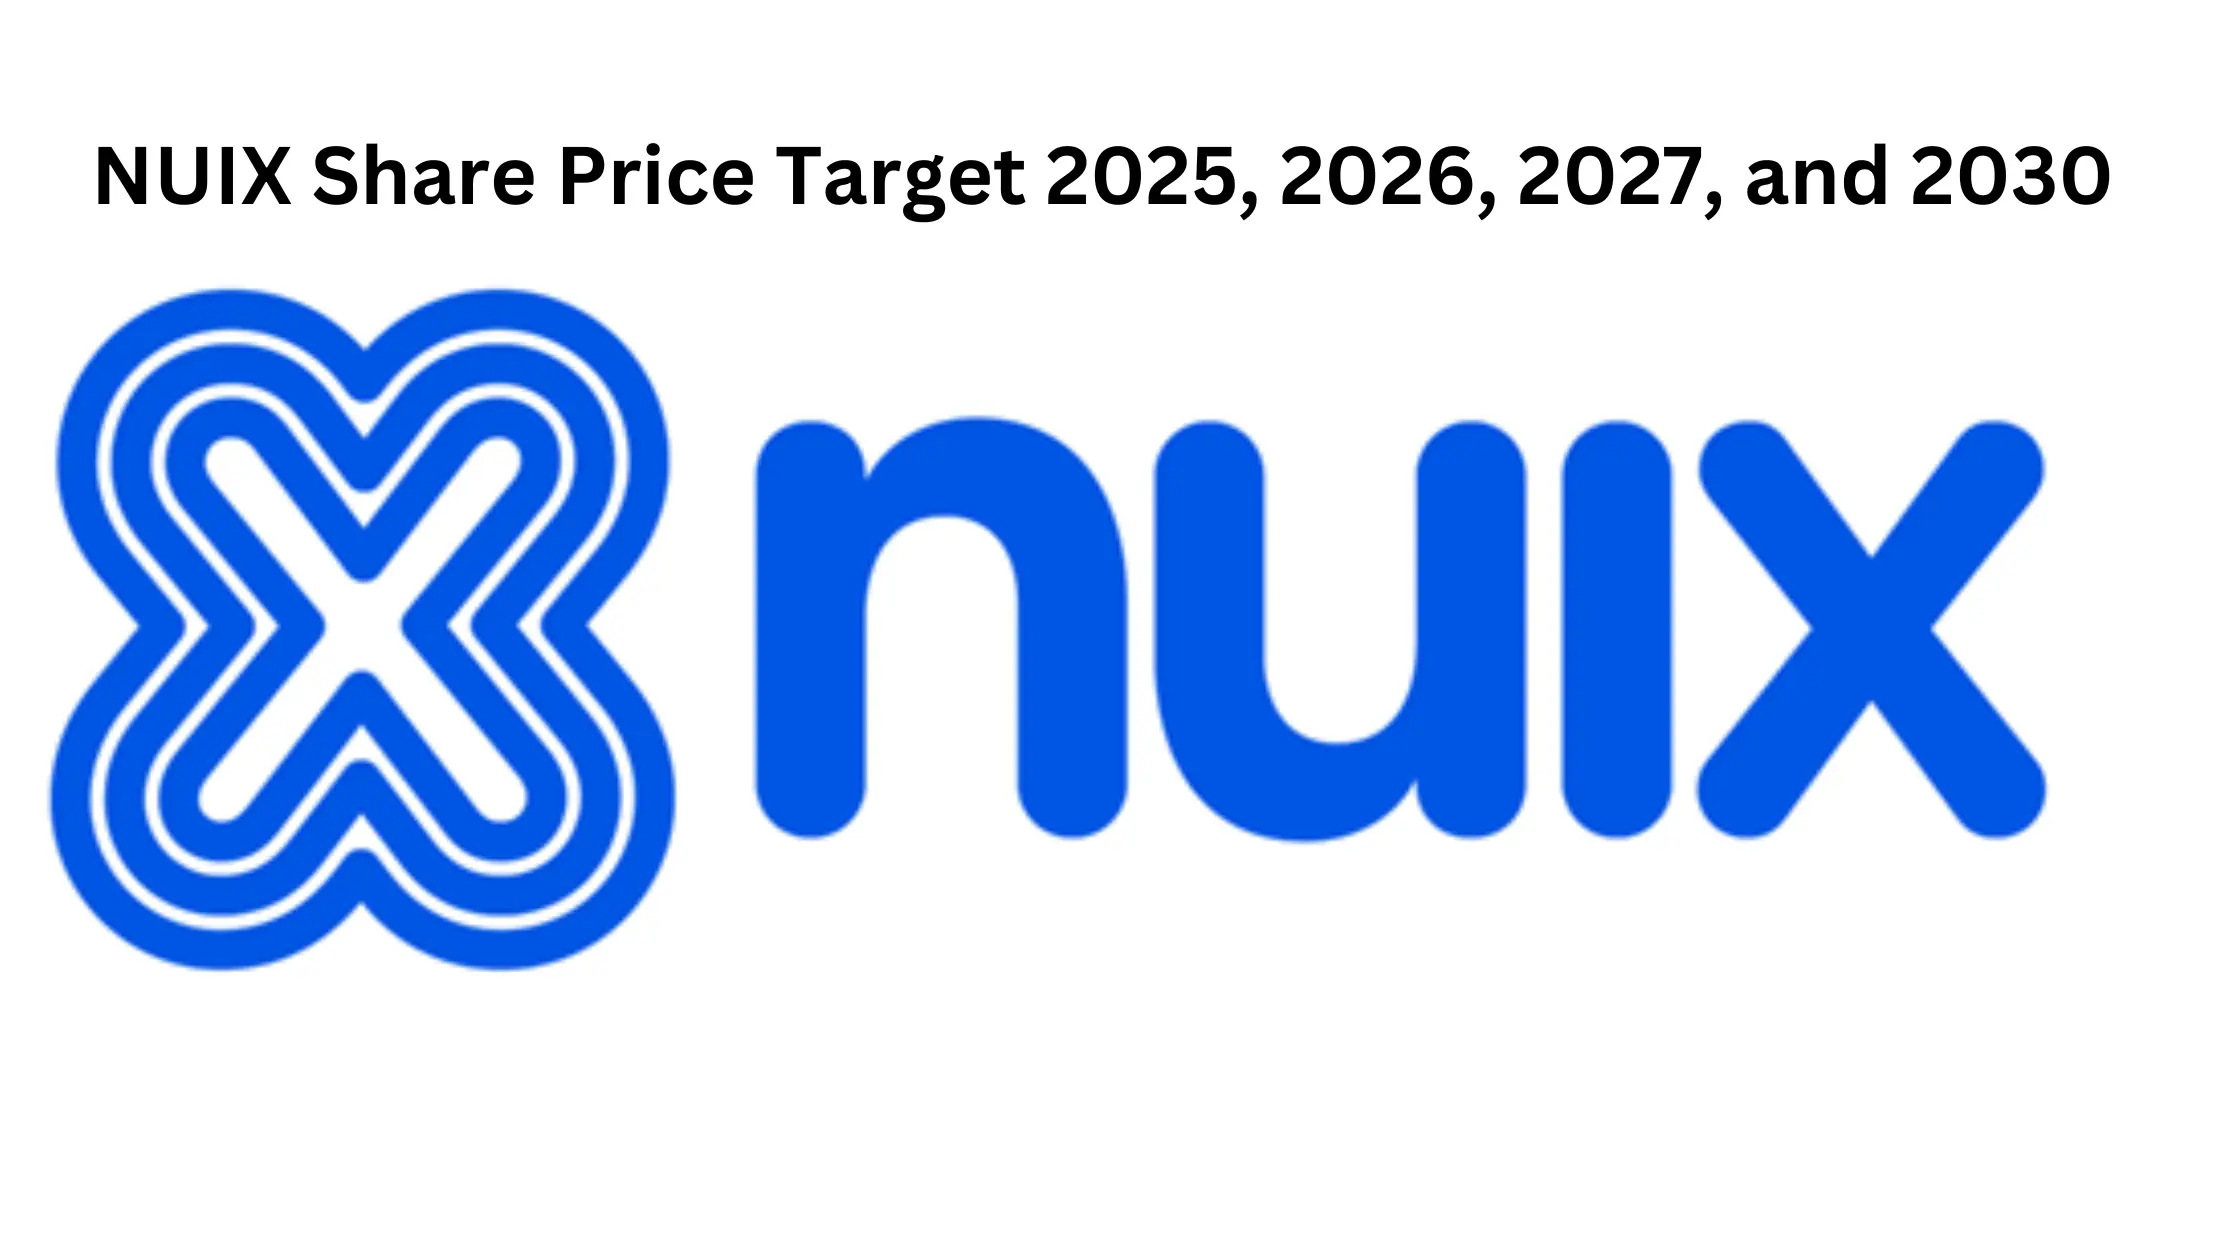 NUIX Share Price target